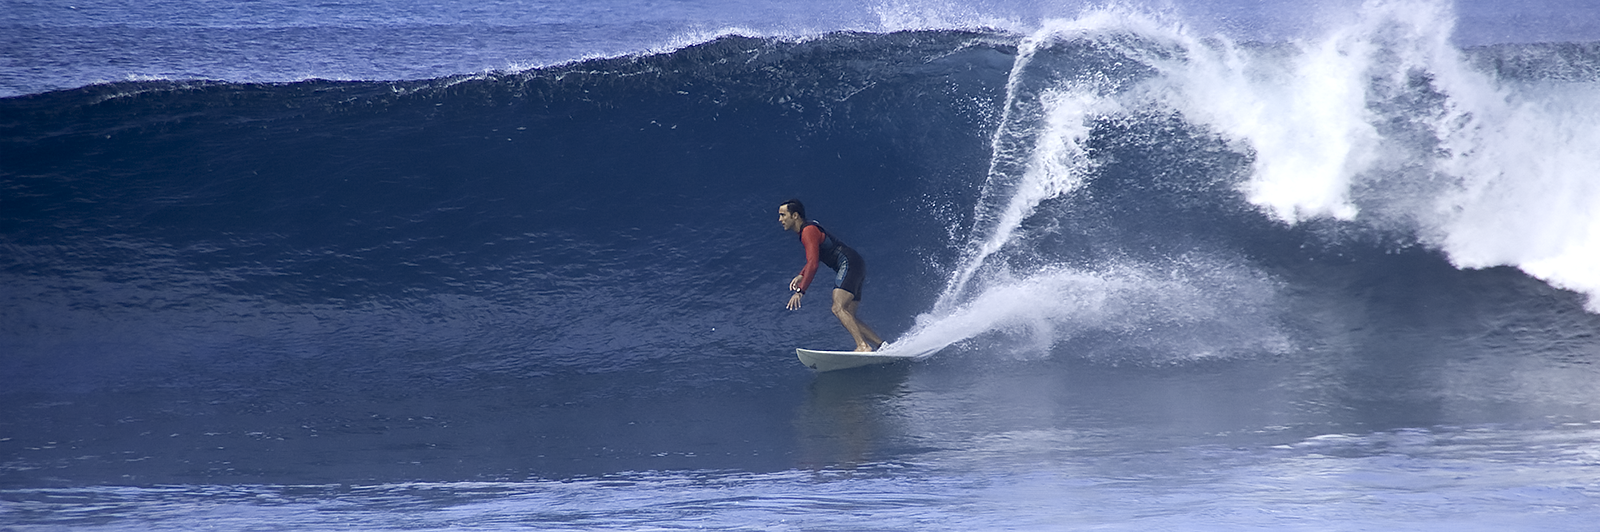 Surfing a big wave